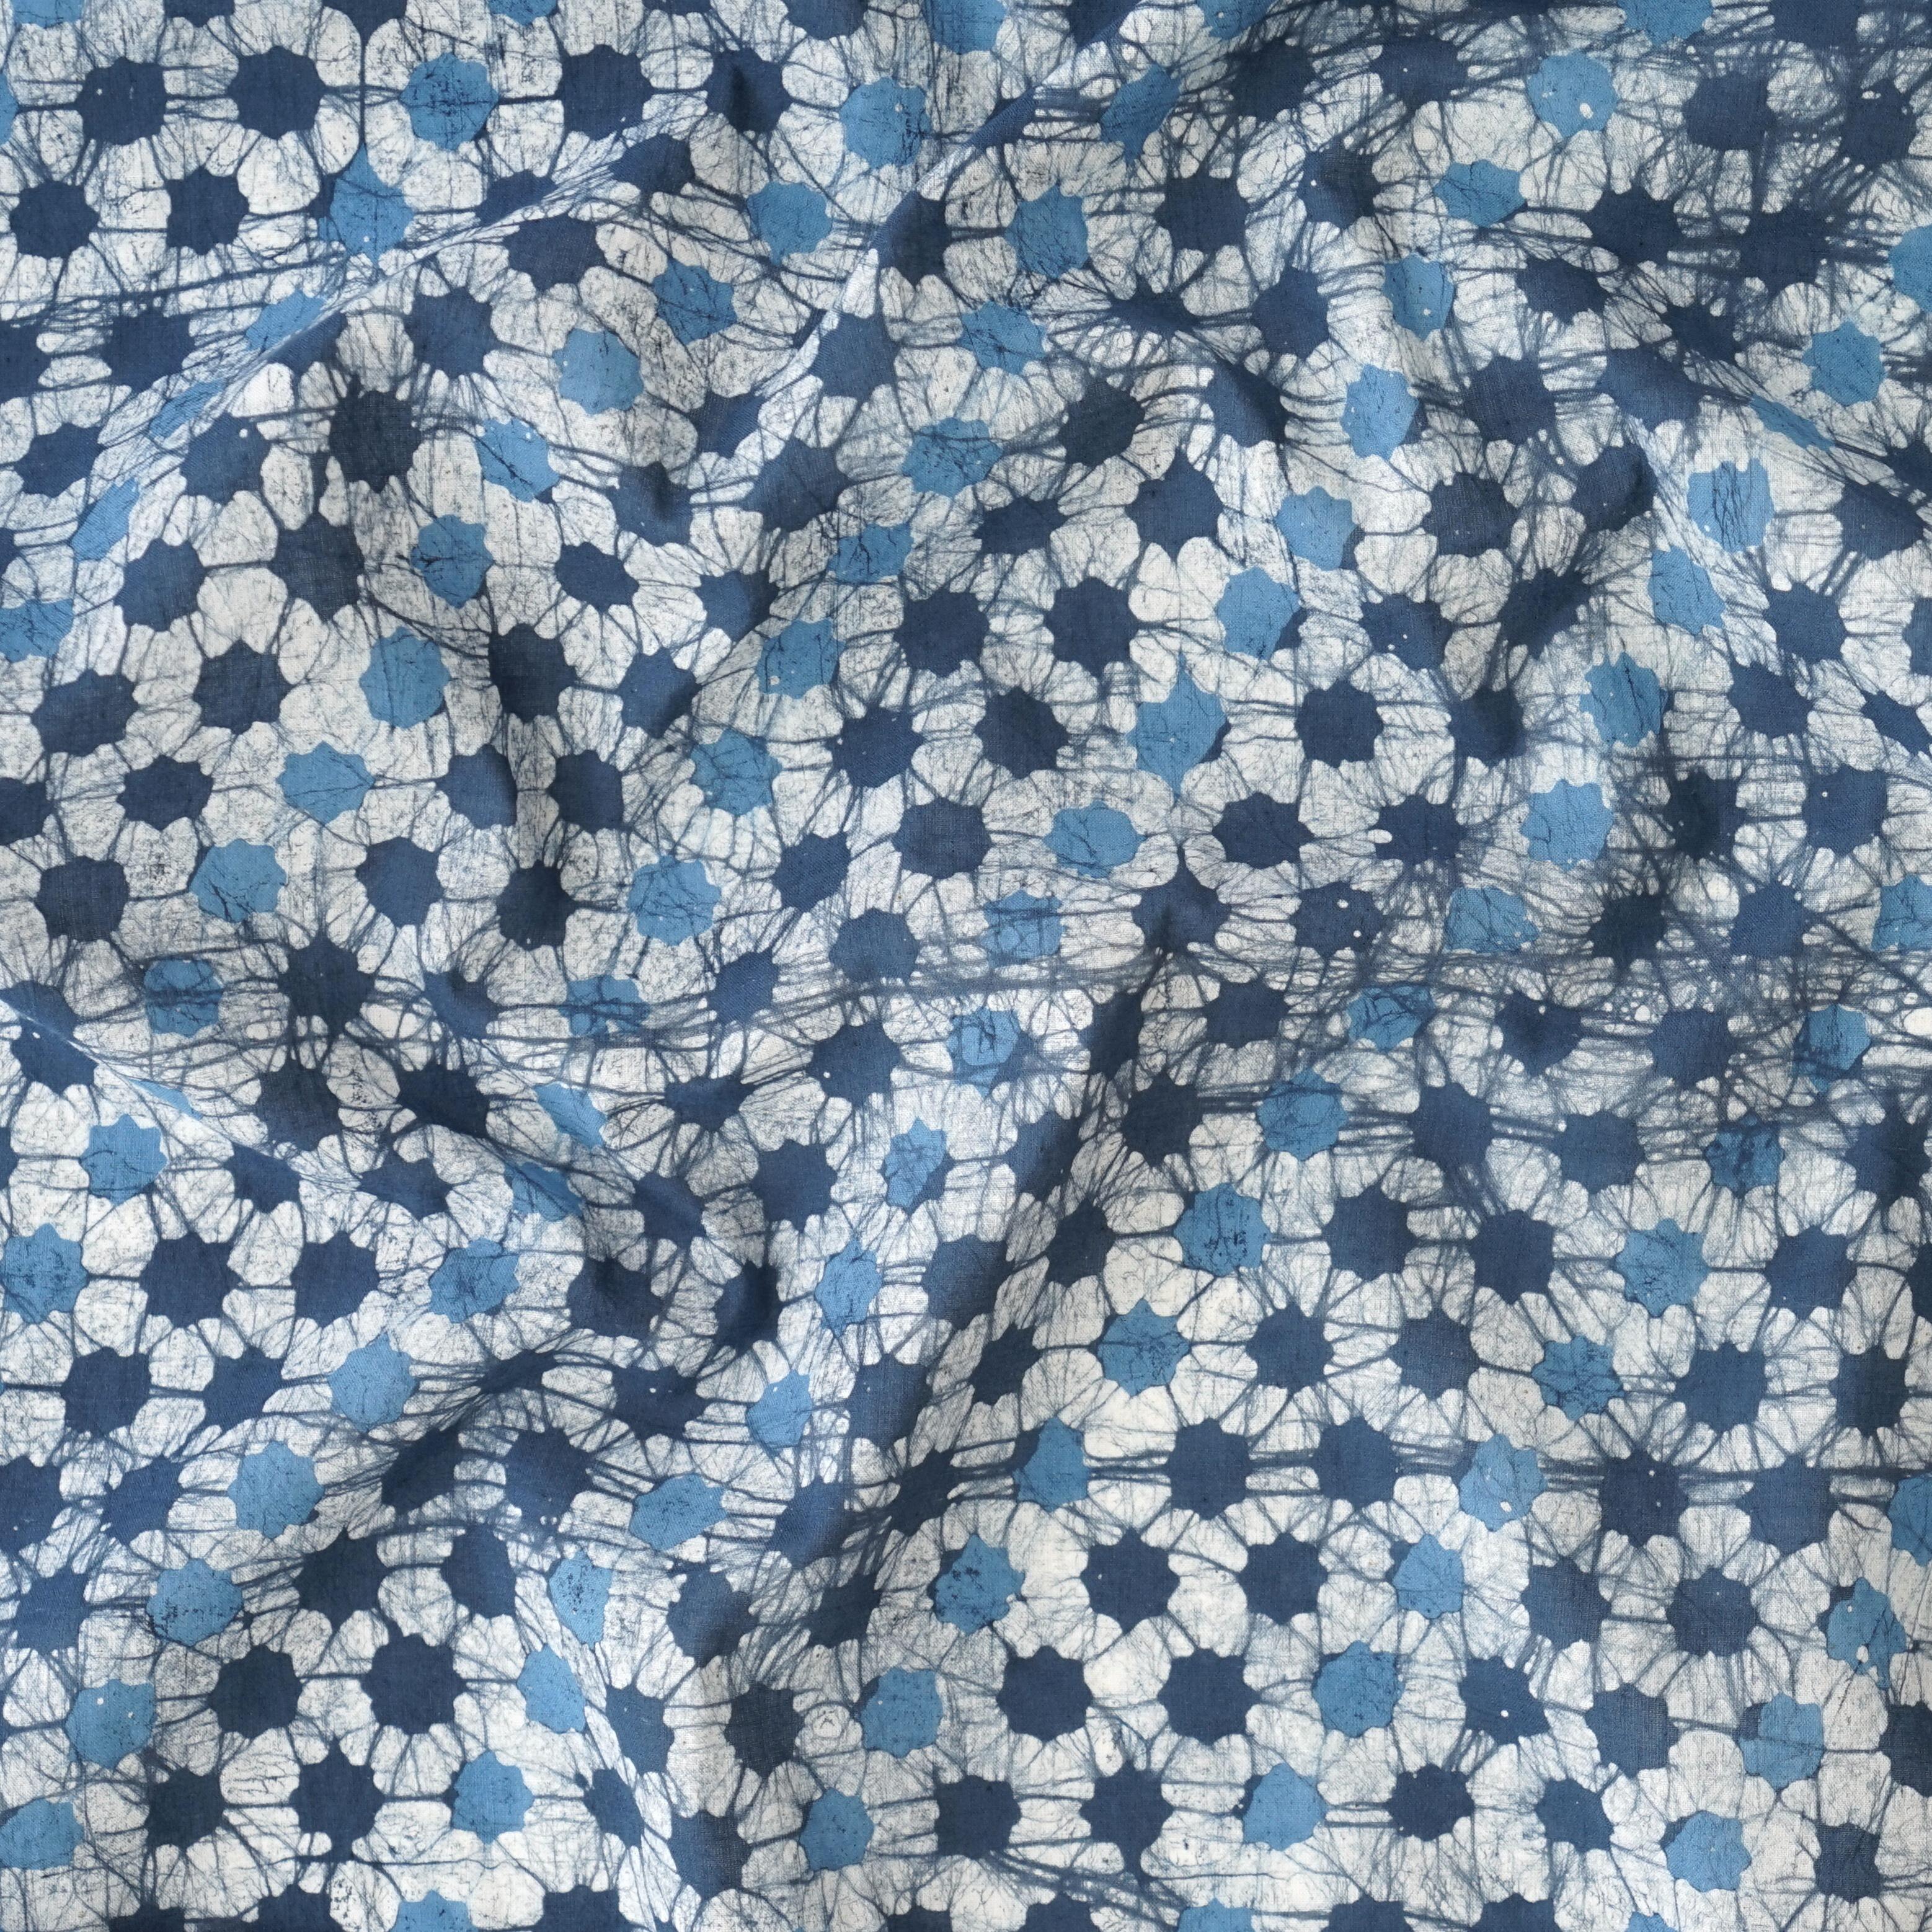 Block-Printed Batik Fabric - Cotton Cloth - Reactive Dyes - Stars Design - Contrast